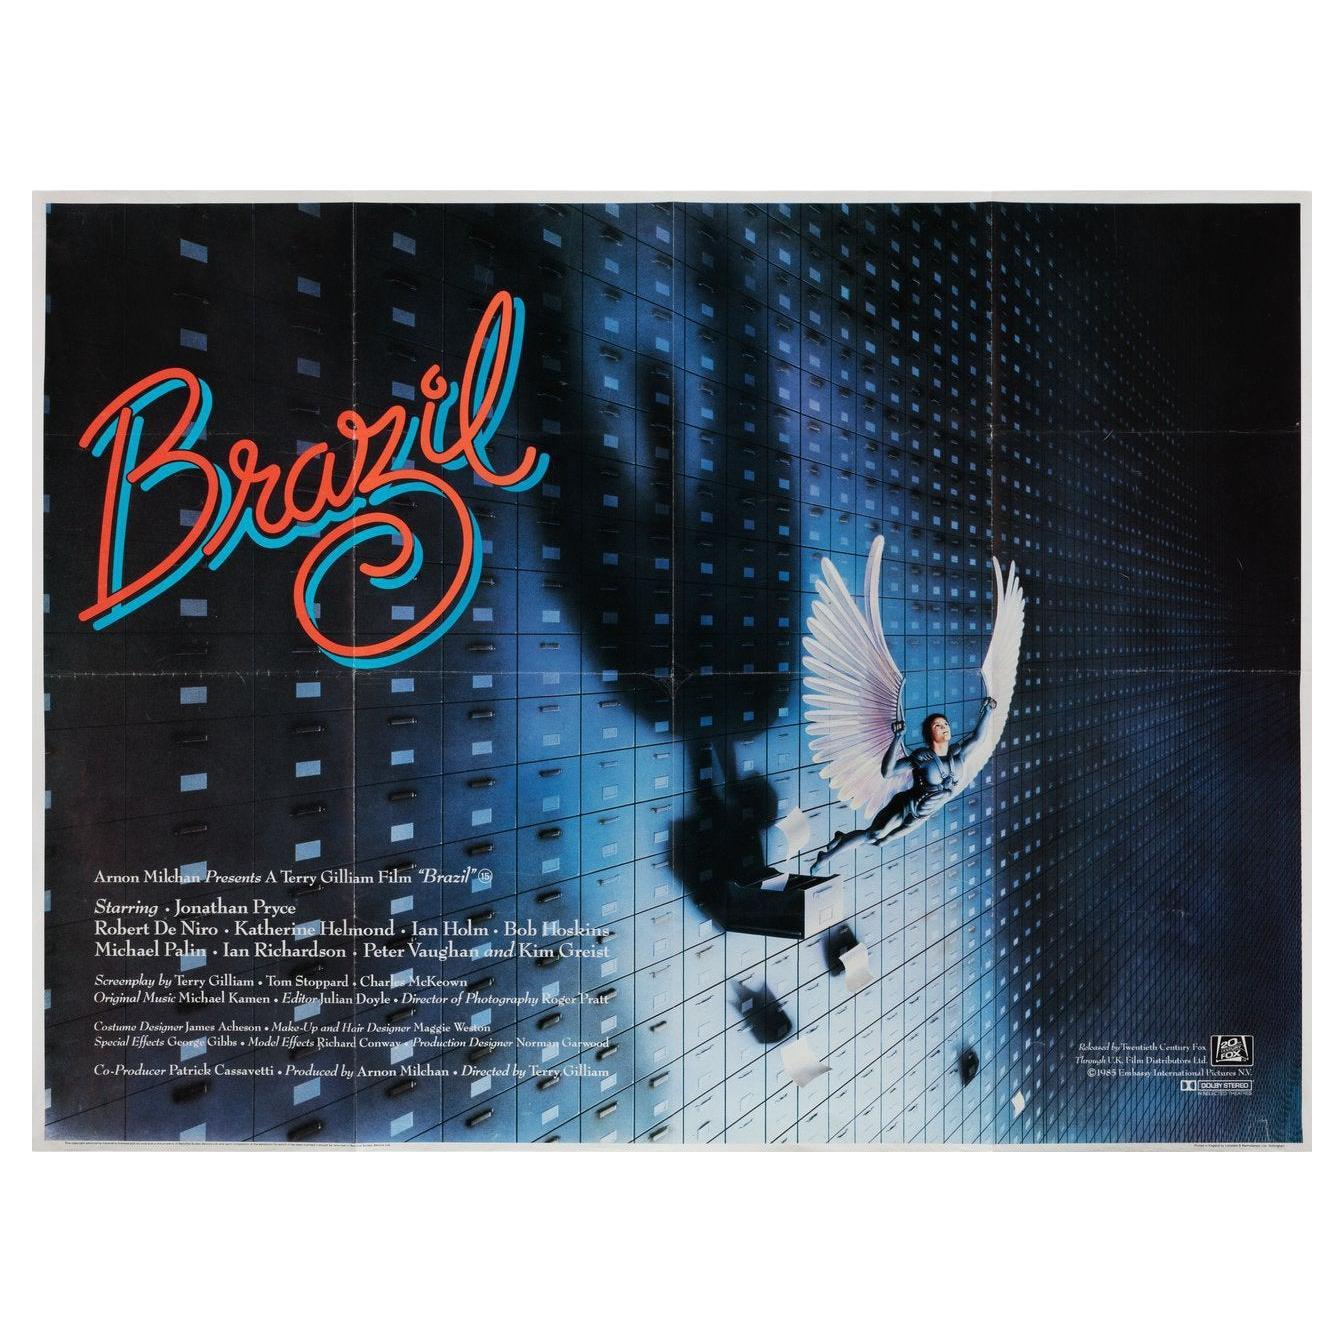 Brazil 1985 British Quad Film Poster For Sale